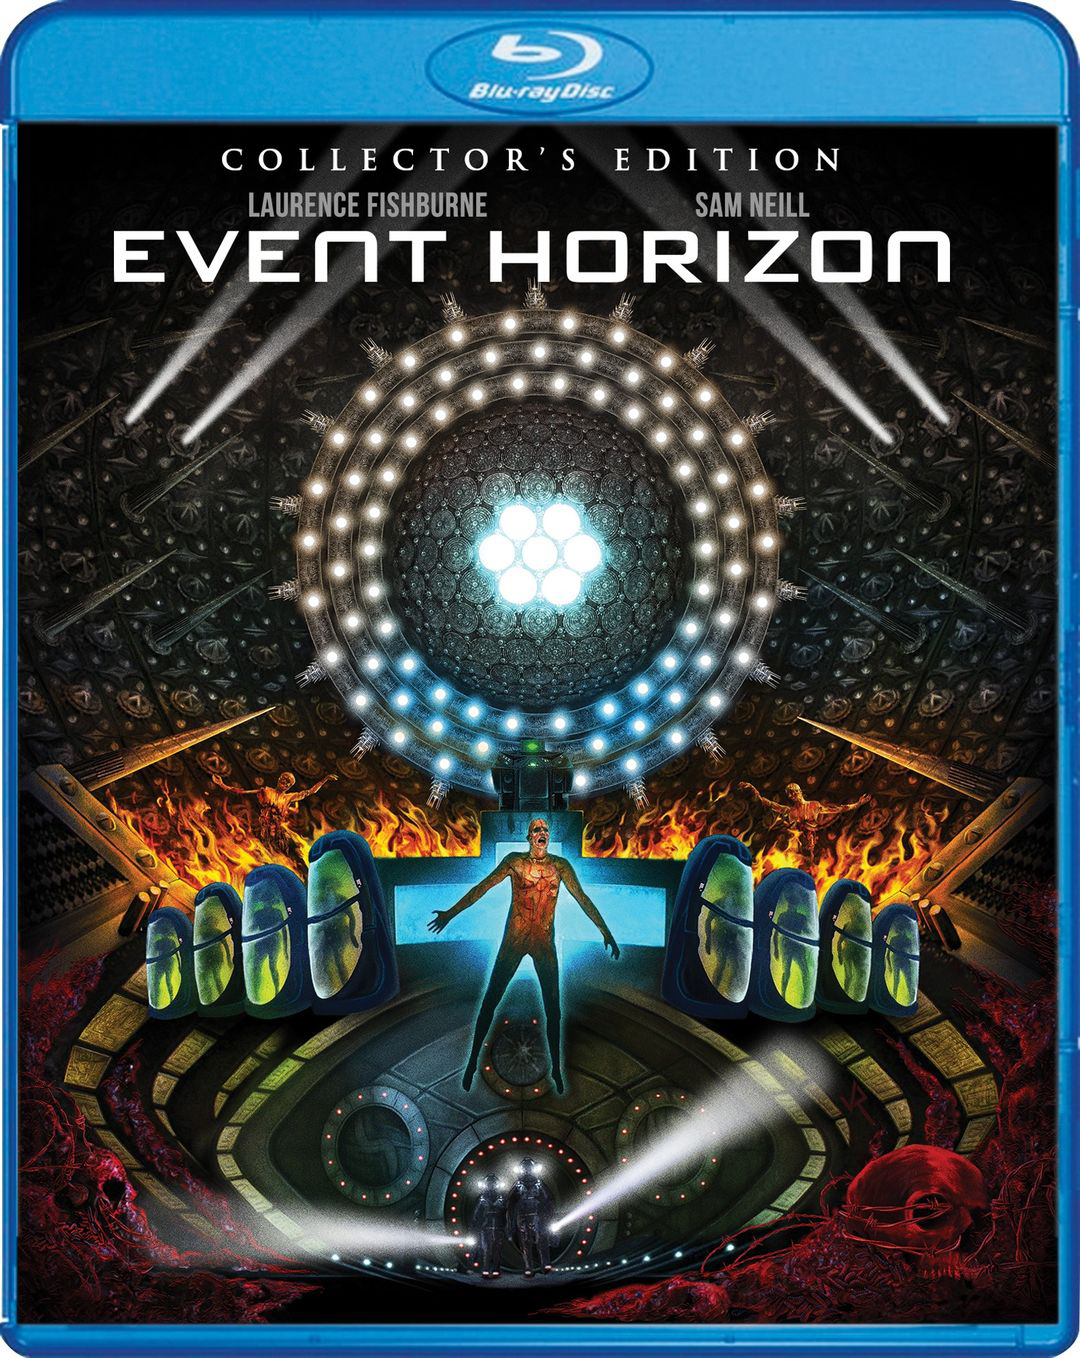 Event Horizon on Blu-ray